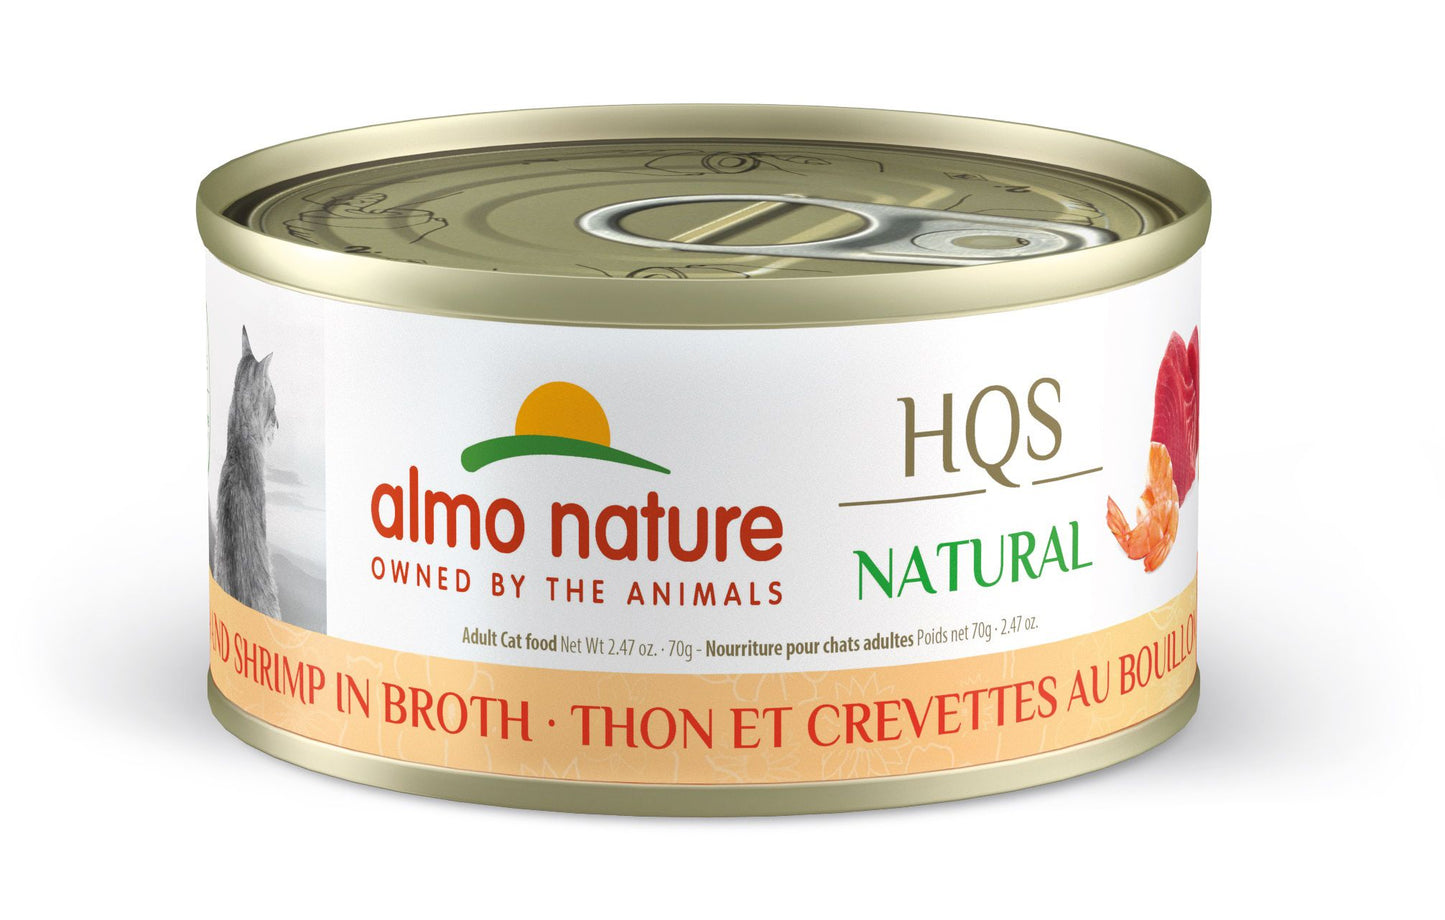 Almo Nature Natural - Tuna and Shrimp in Broth, 2.47oz